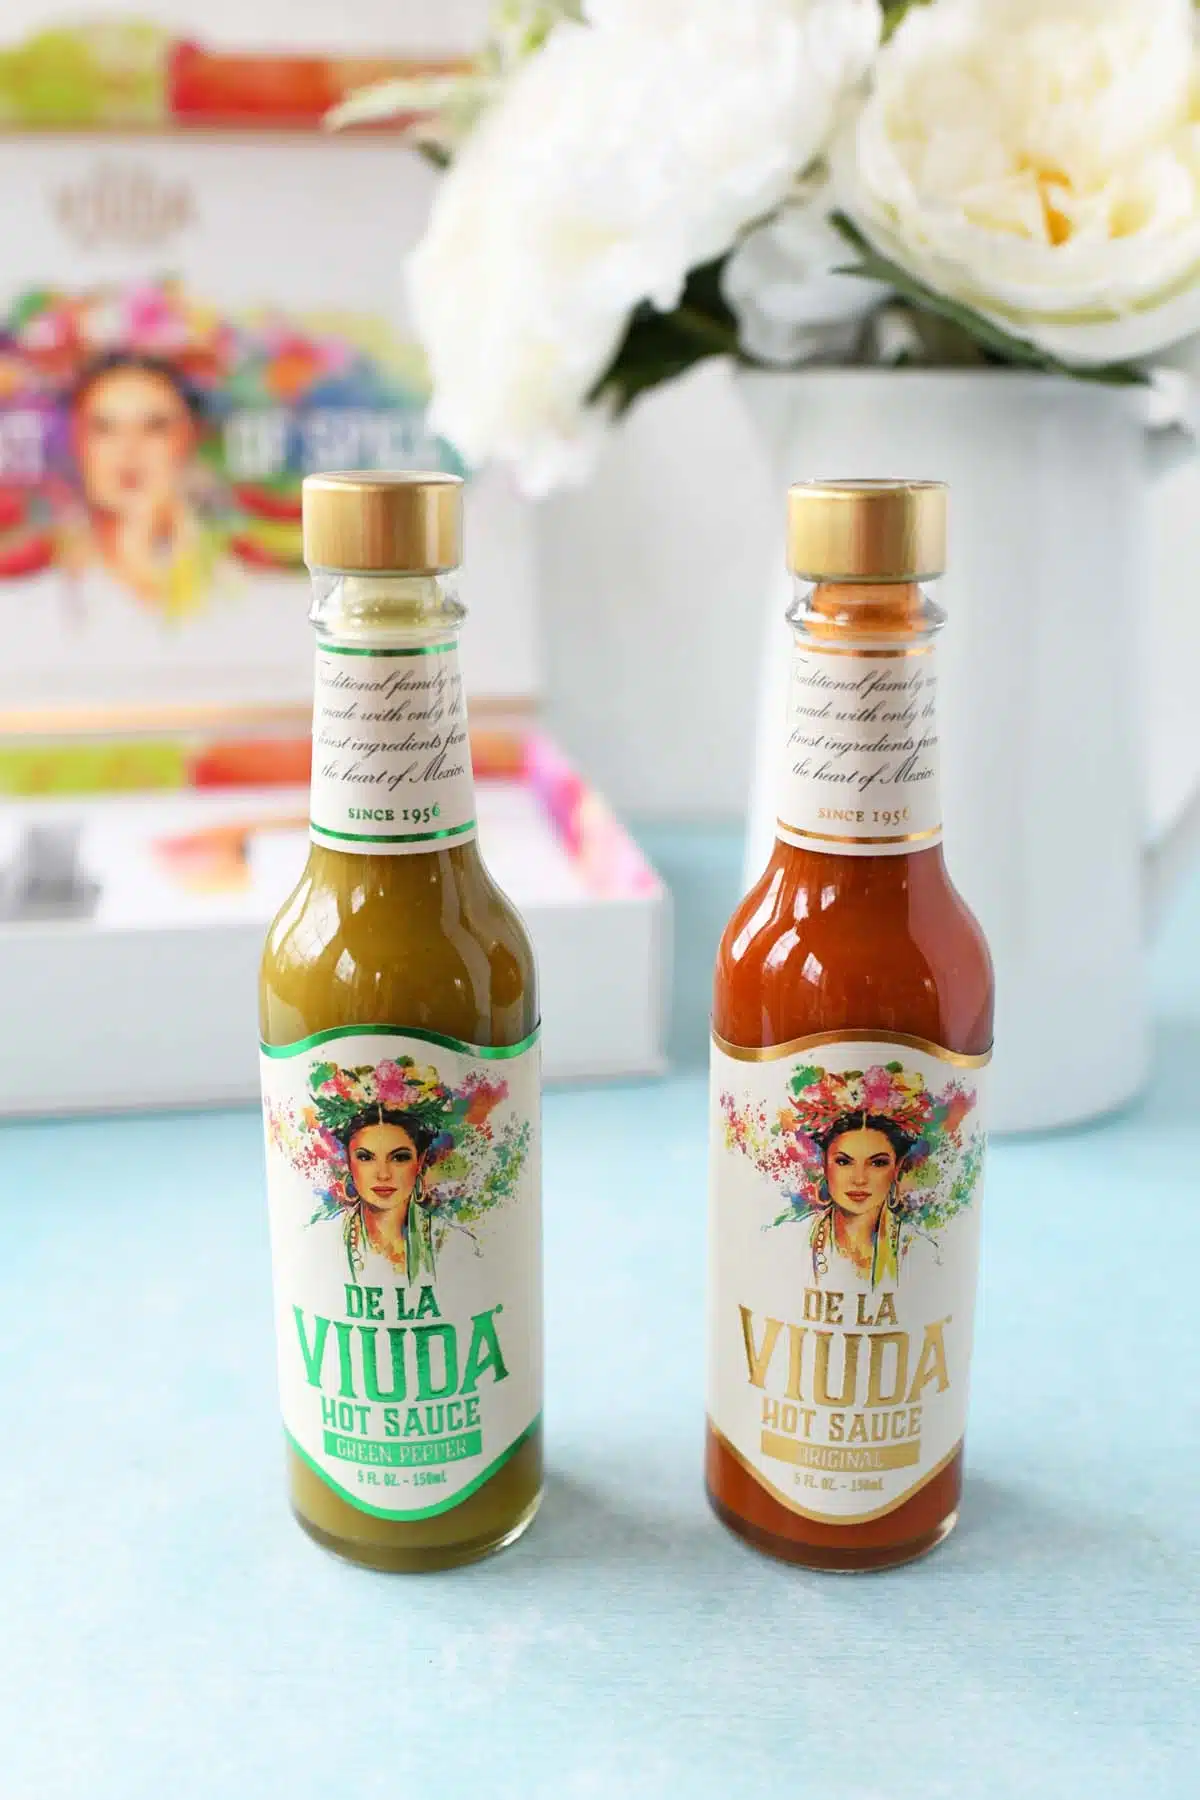 De La Viuda Hot Sauce bottles on a blue table with white flowers.